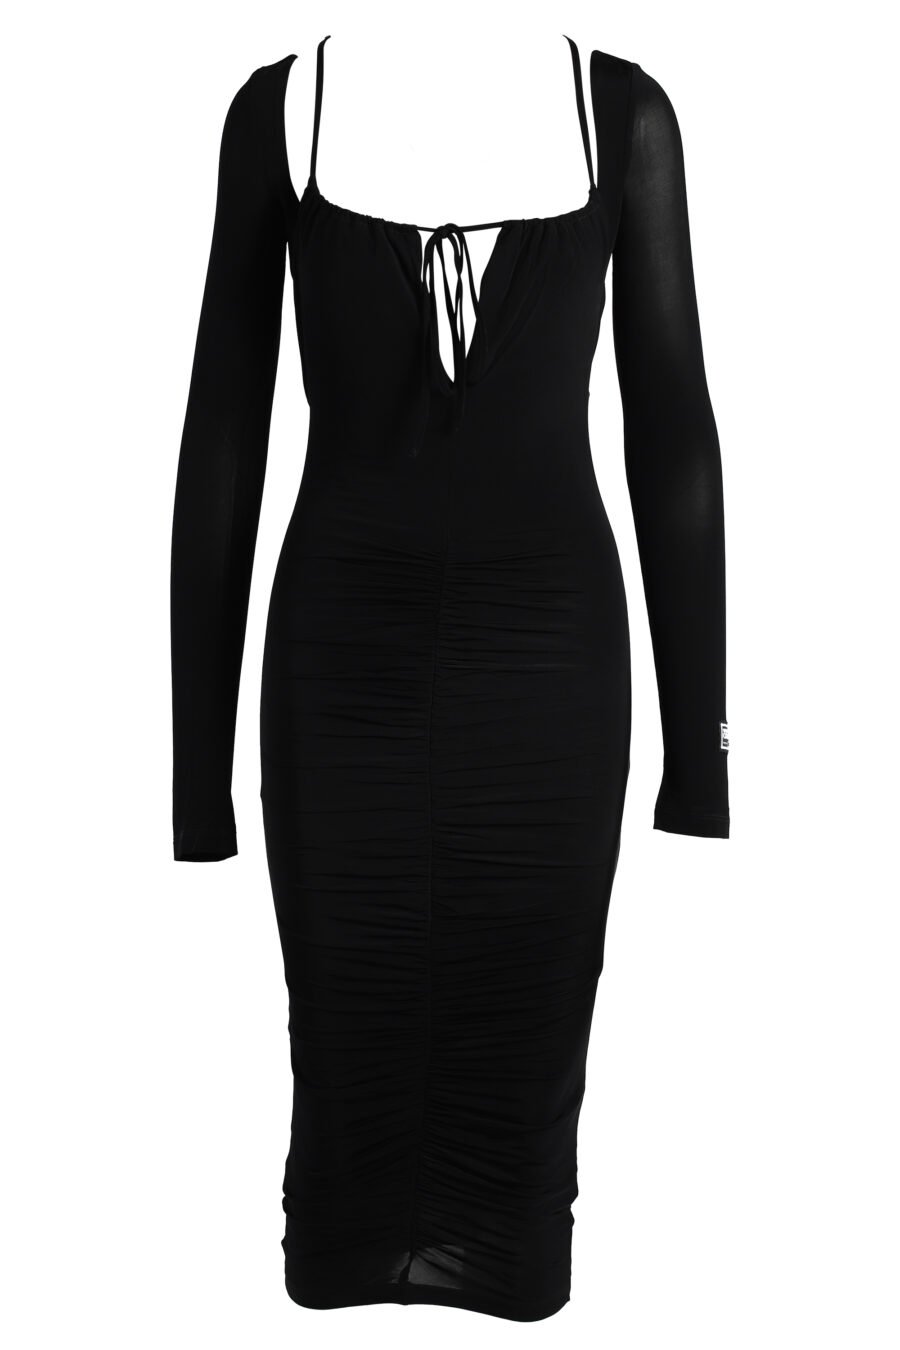 Vestido negro manga larga con detalles en transparencia - IMG 4875